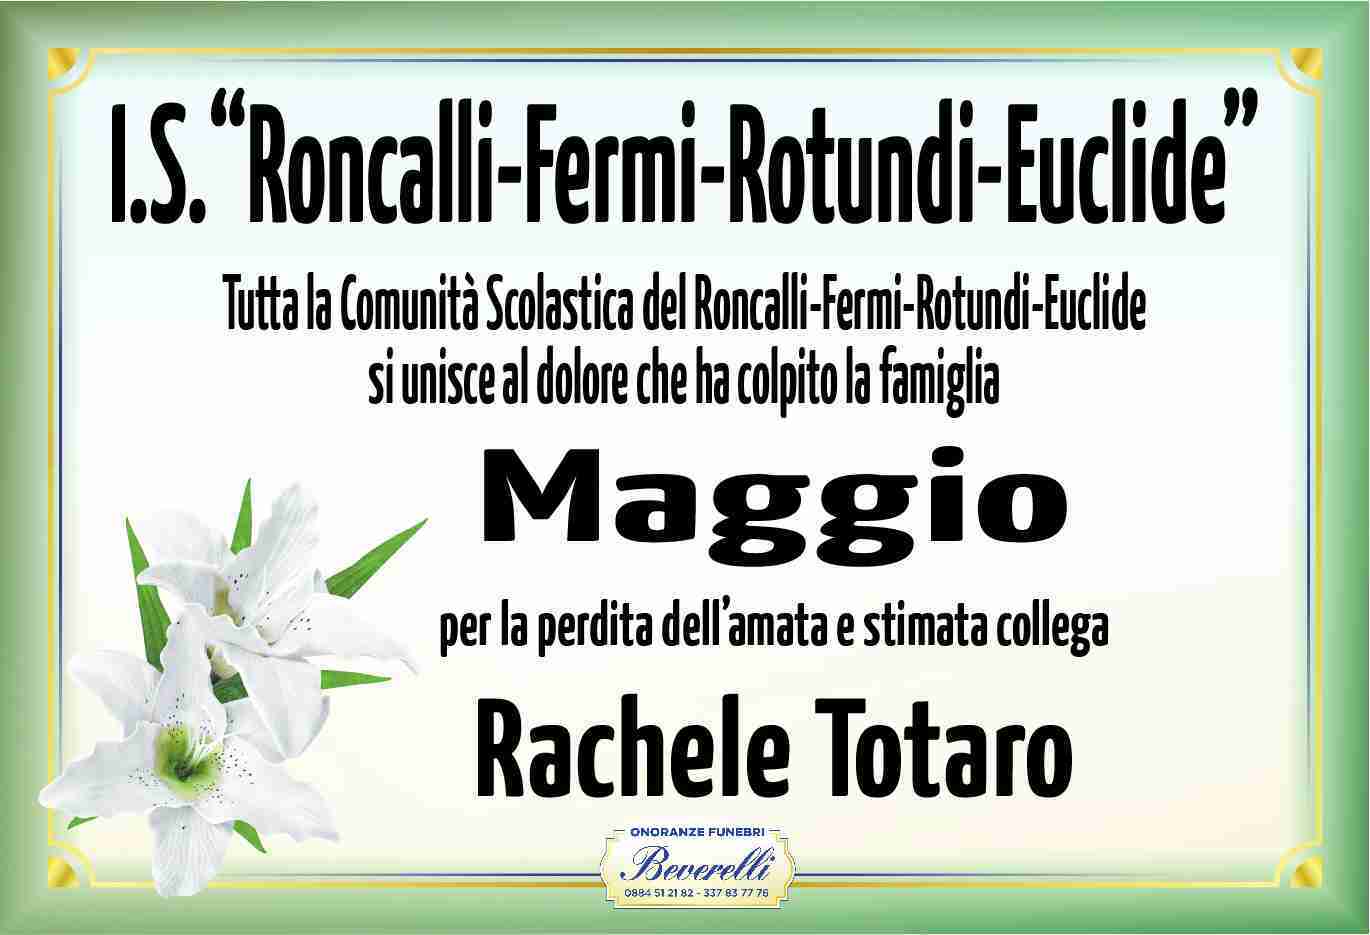 Rachele Totaro